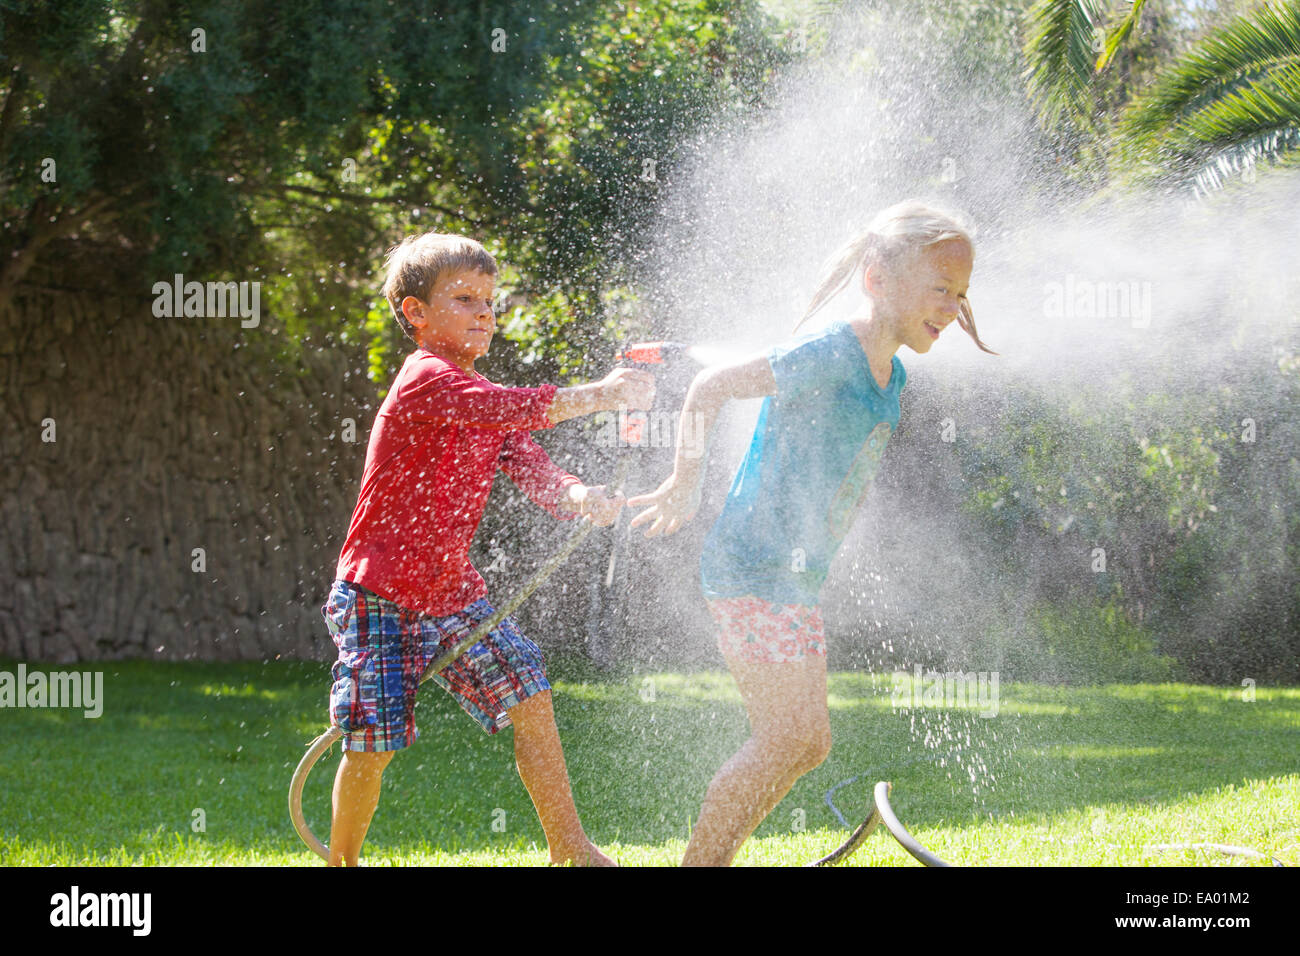 Boy splashing girl in garden with water sprinkler Stock Photo